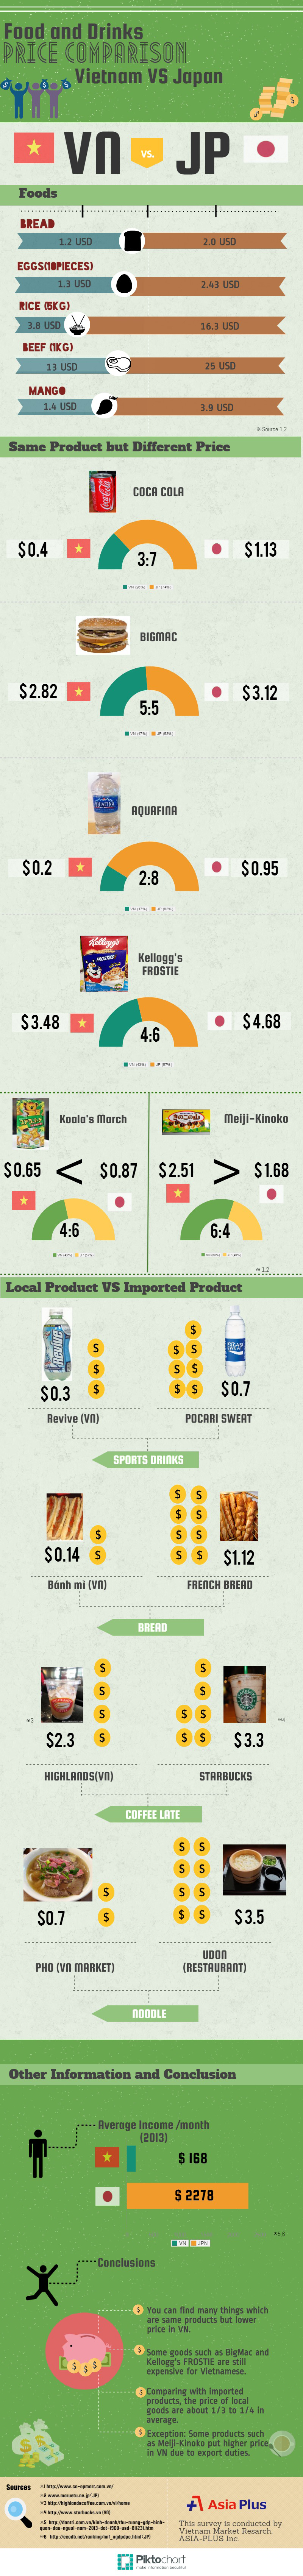 Price Comparison between Vietnam and Japan